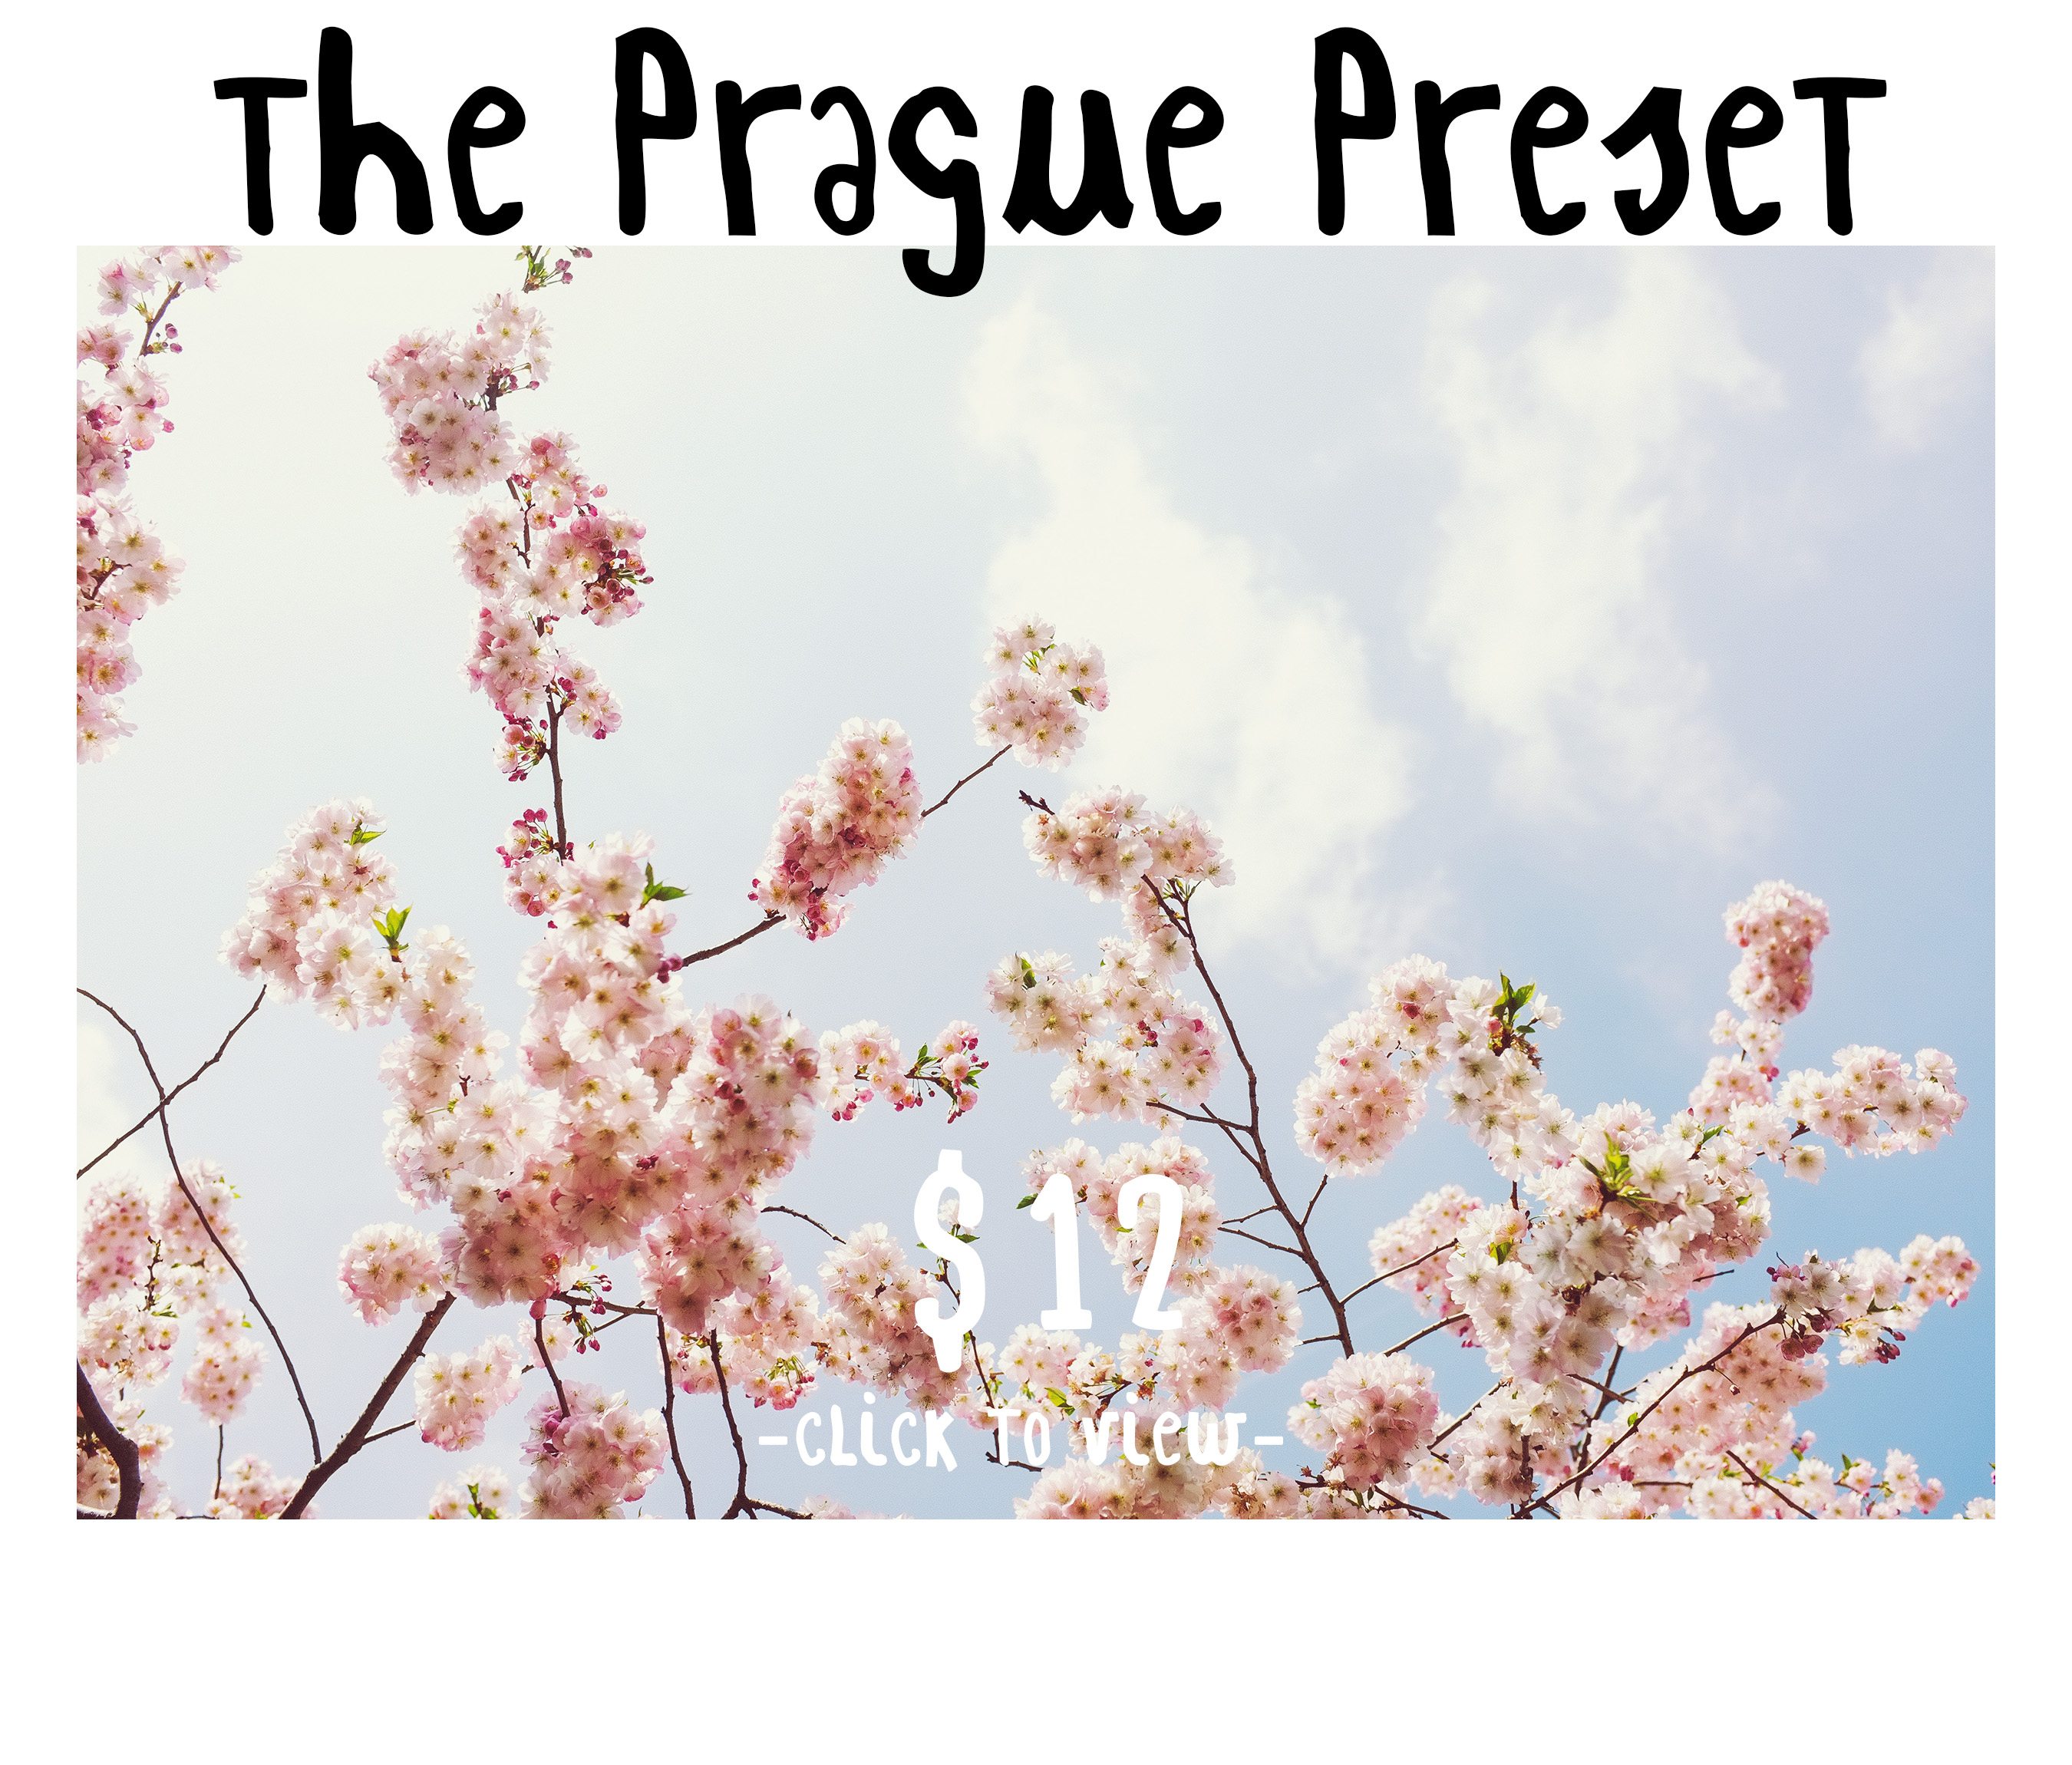 Prague Preset